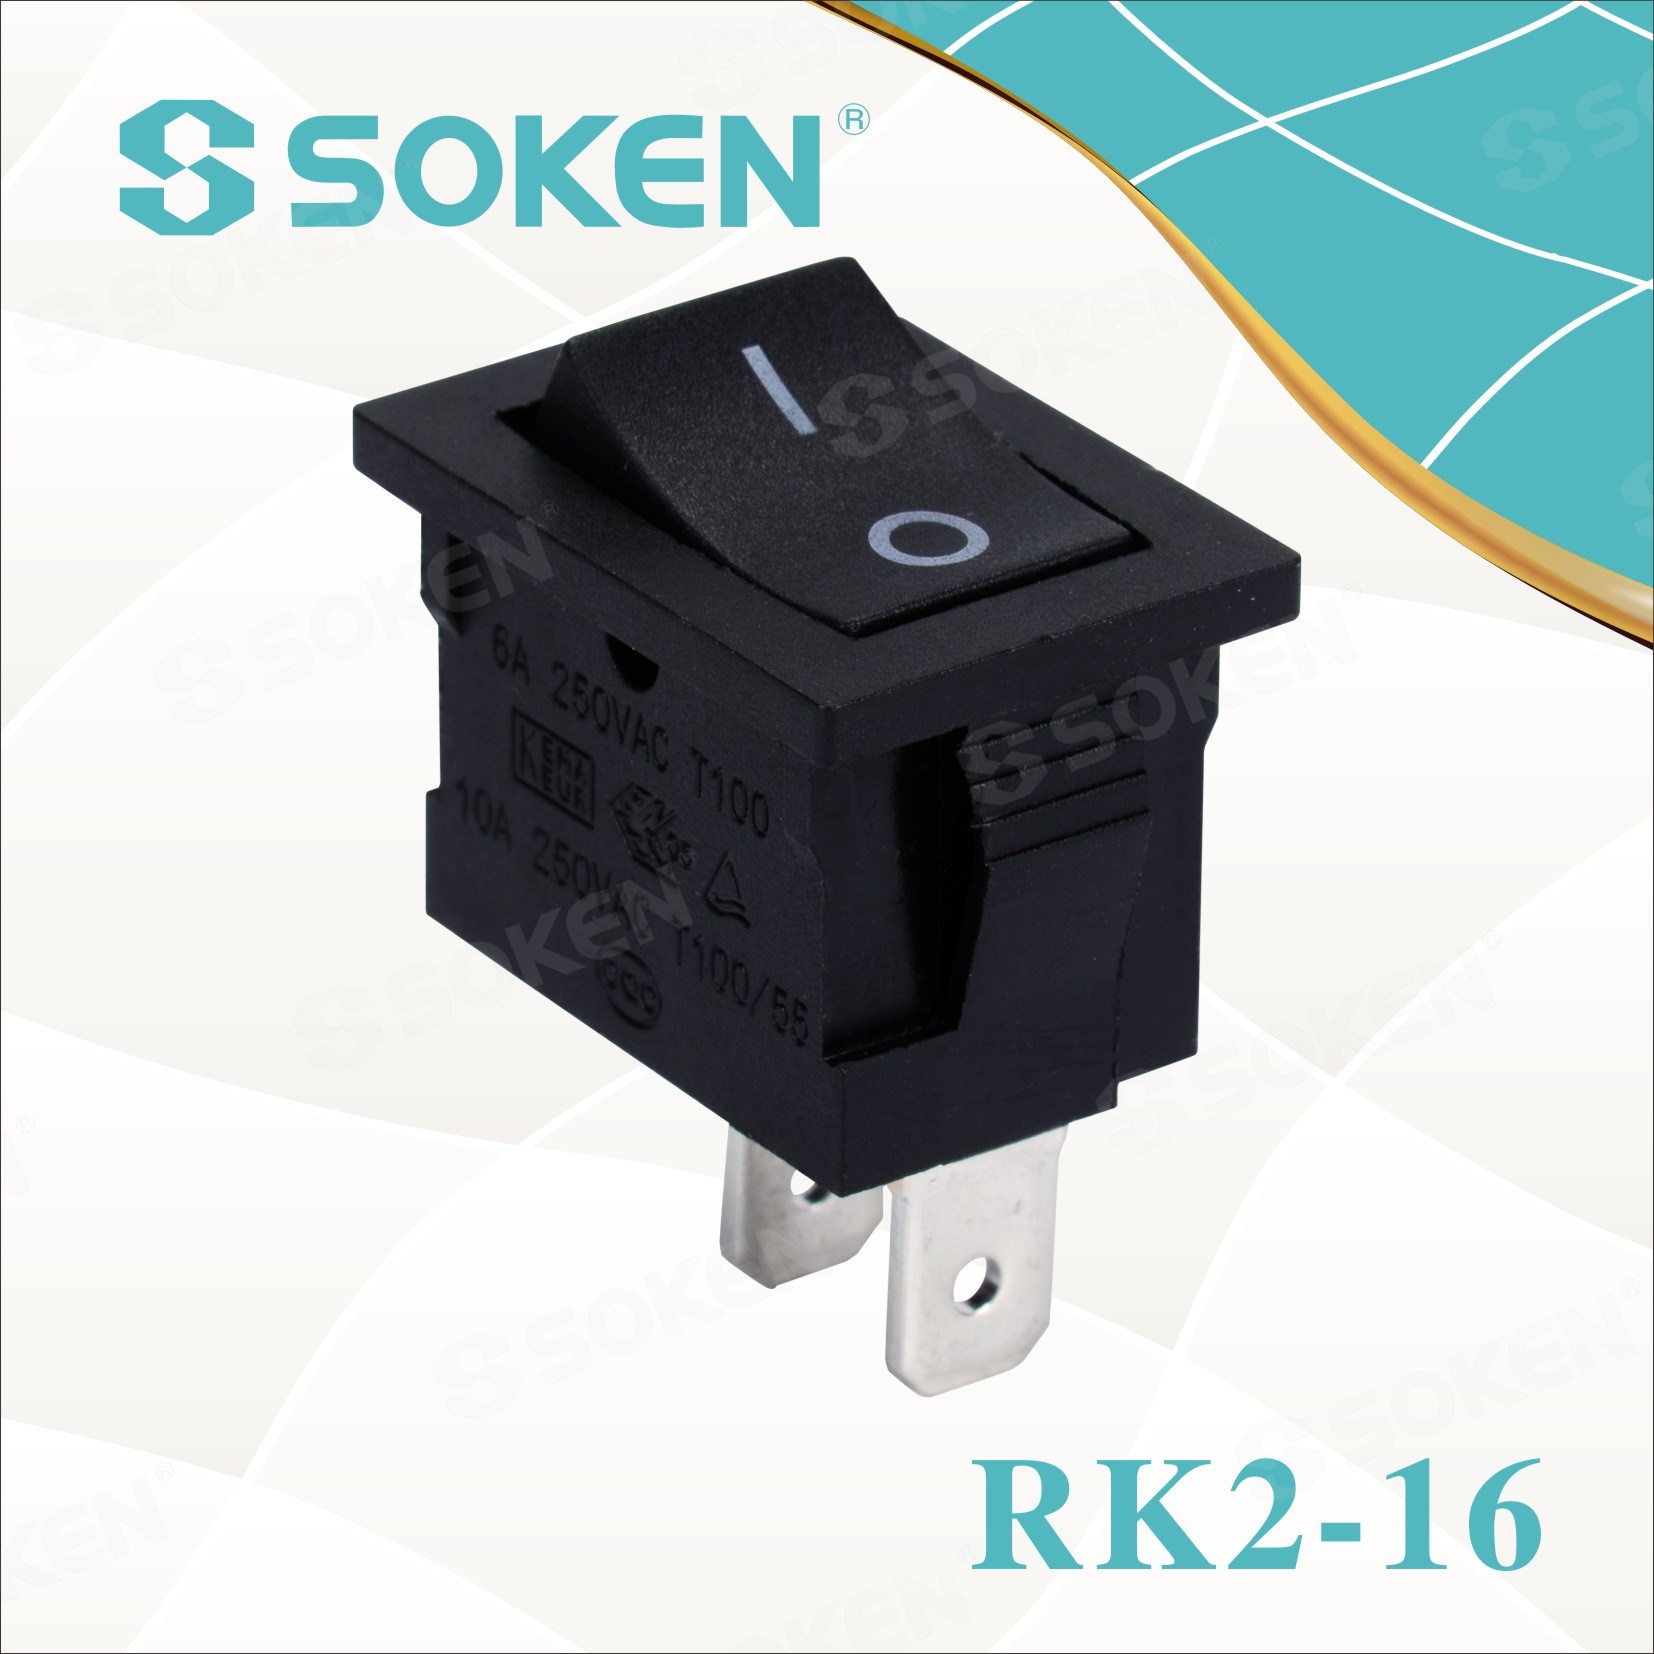 Sokne Rk2-16 1X2 B/B on off Rocker Switch